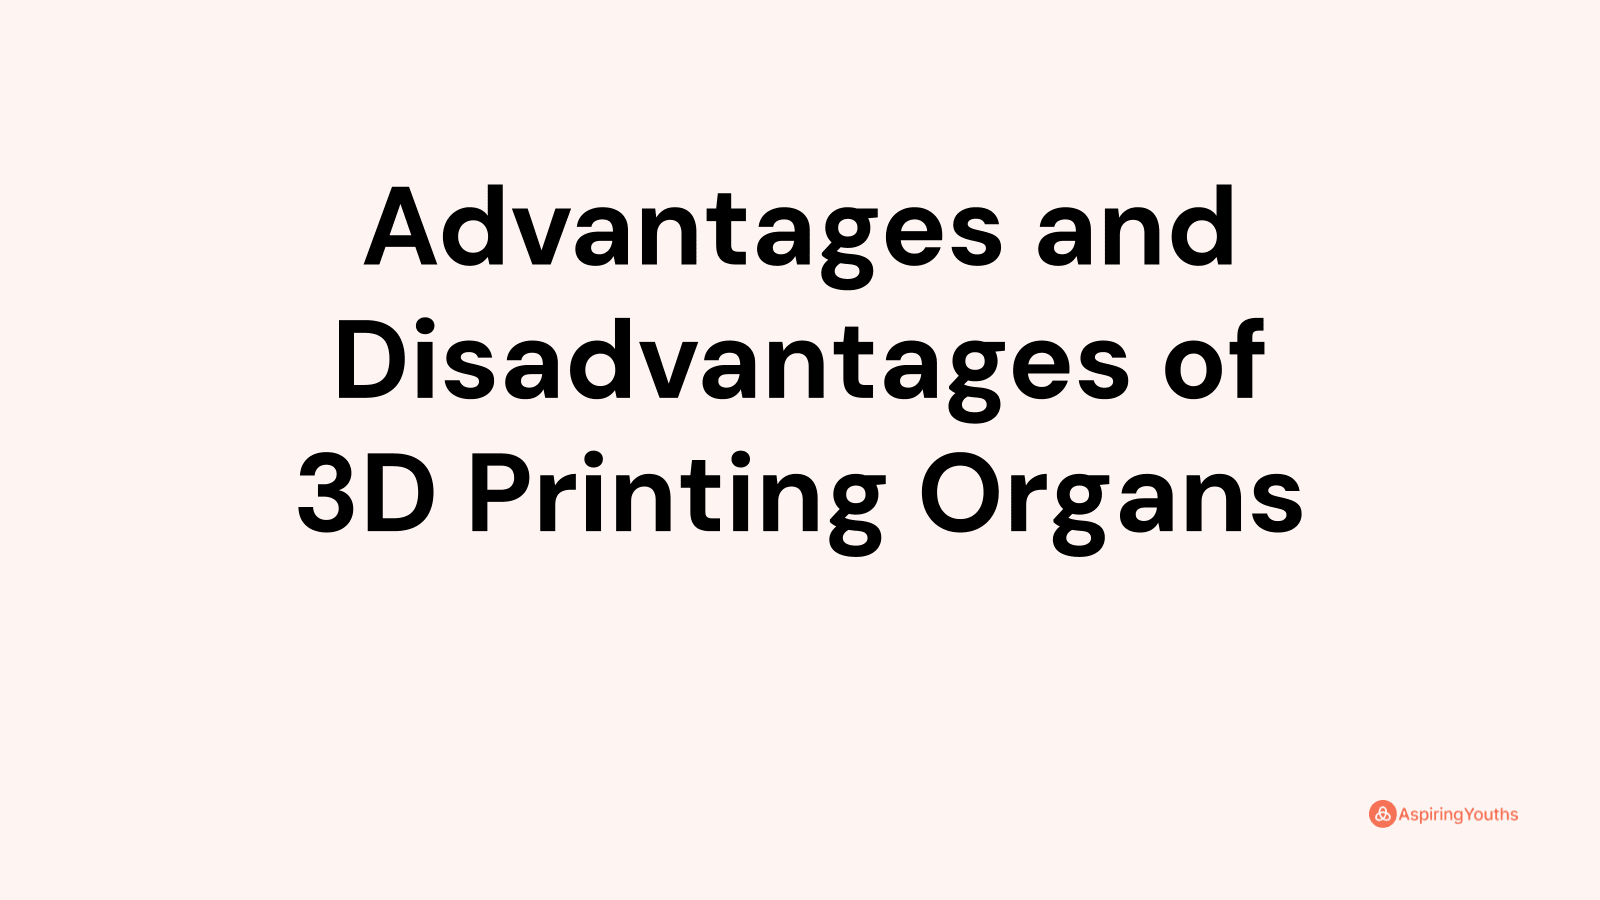 Advantages and disadvantages of 3D Printing Organs